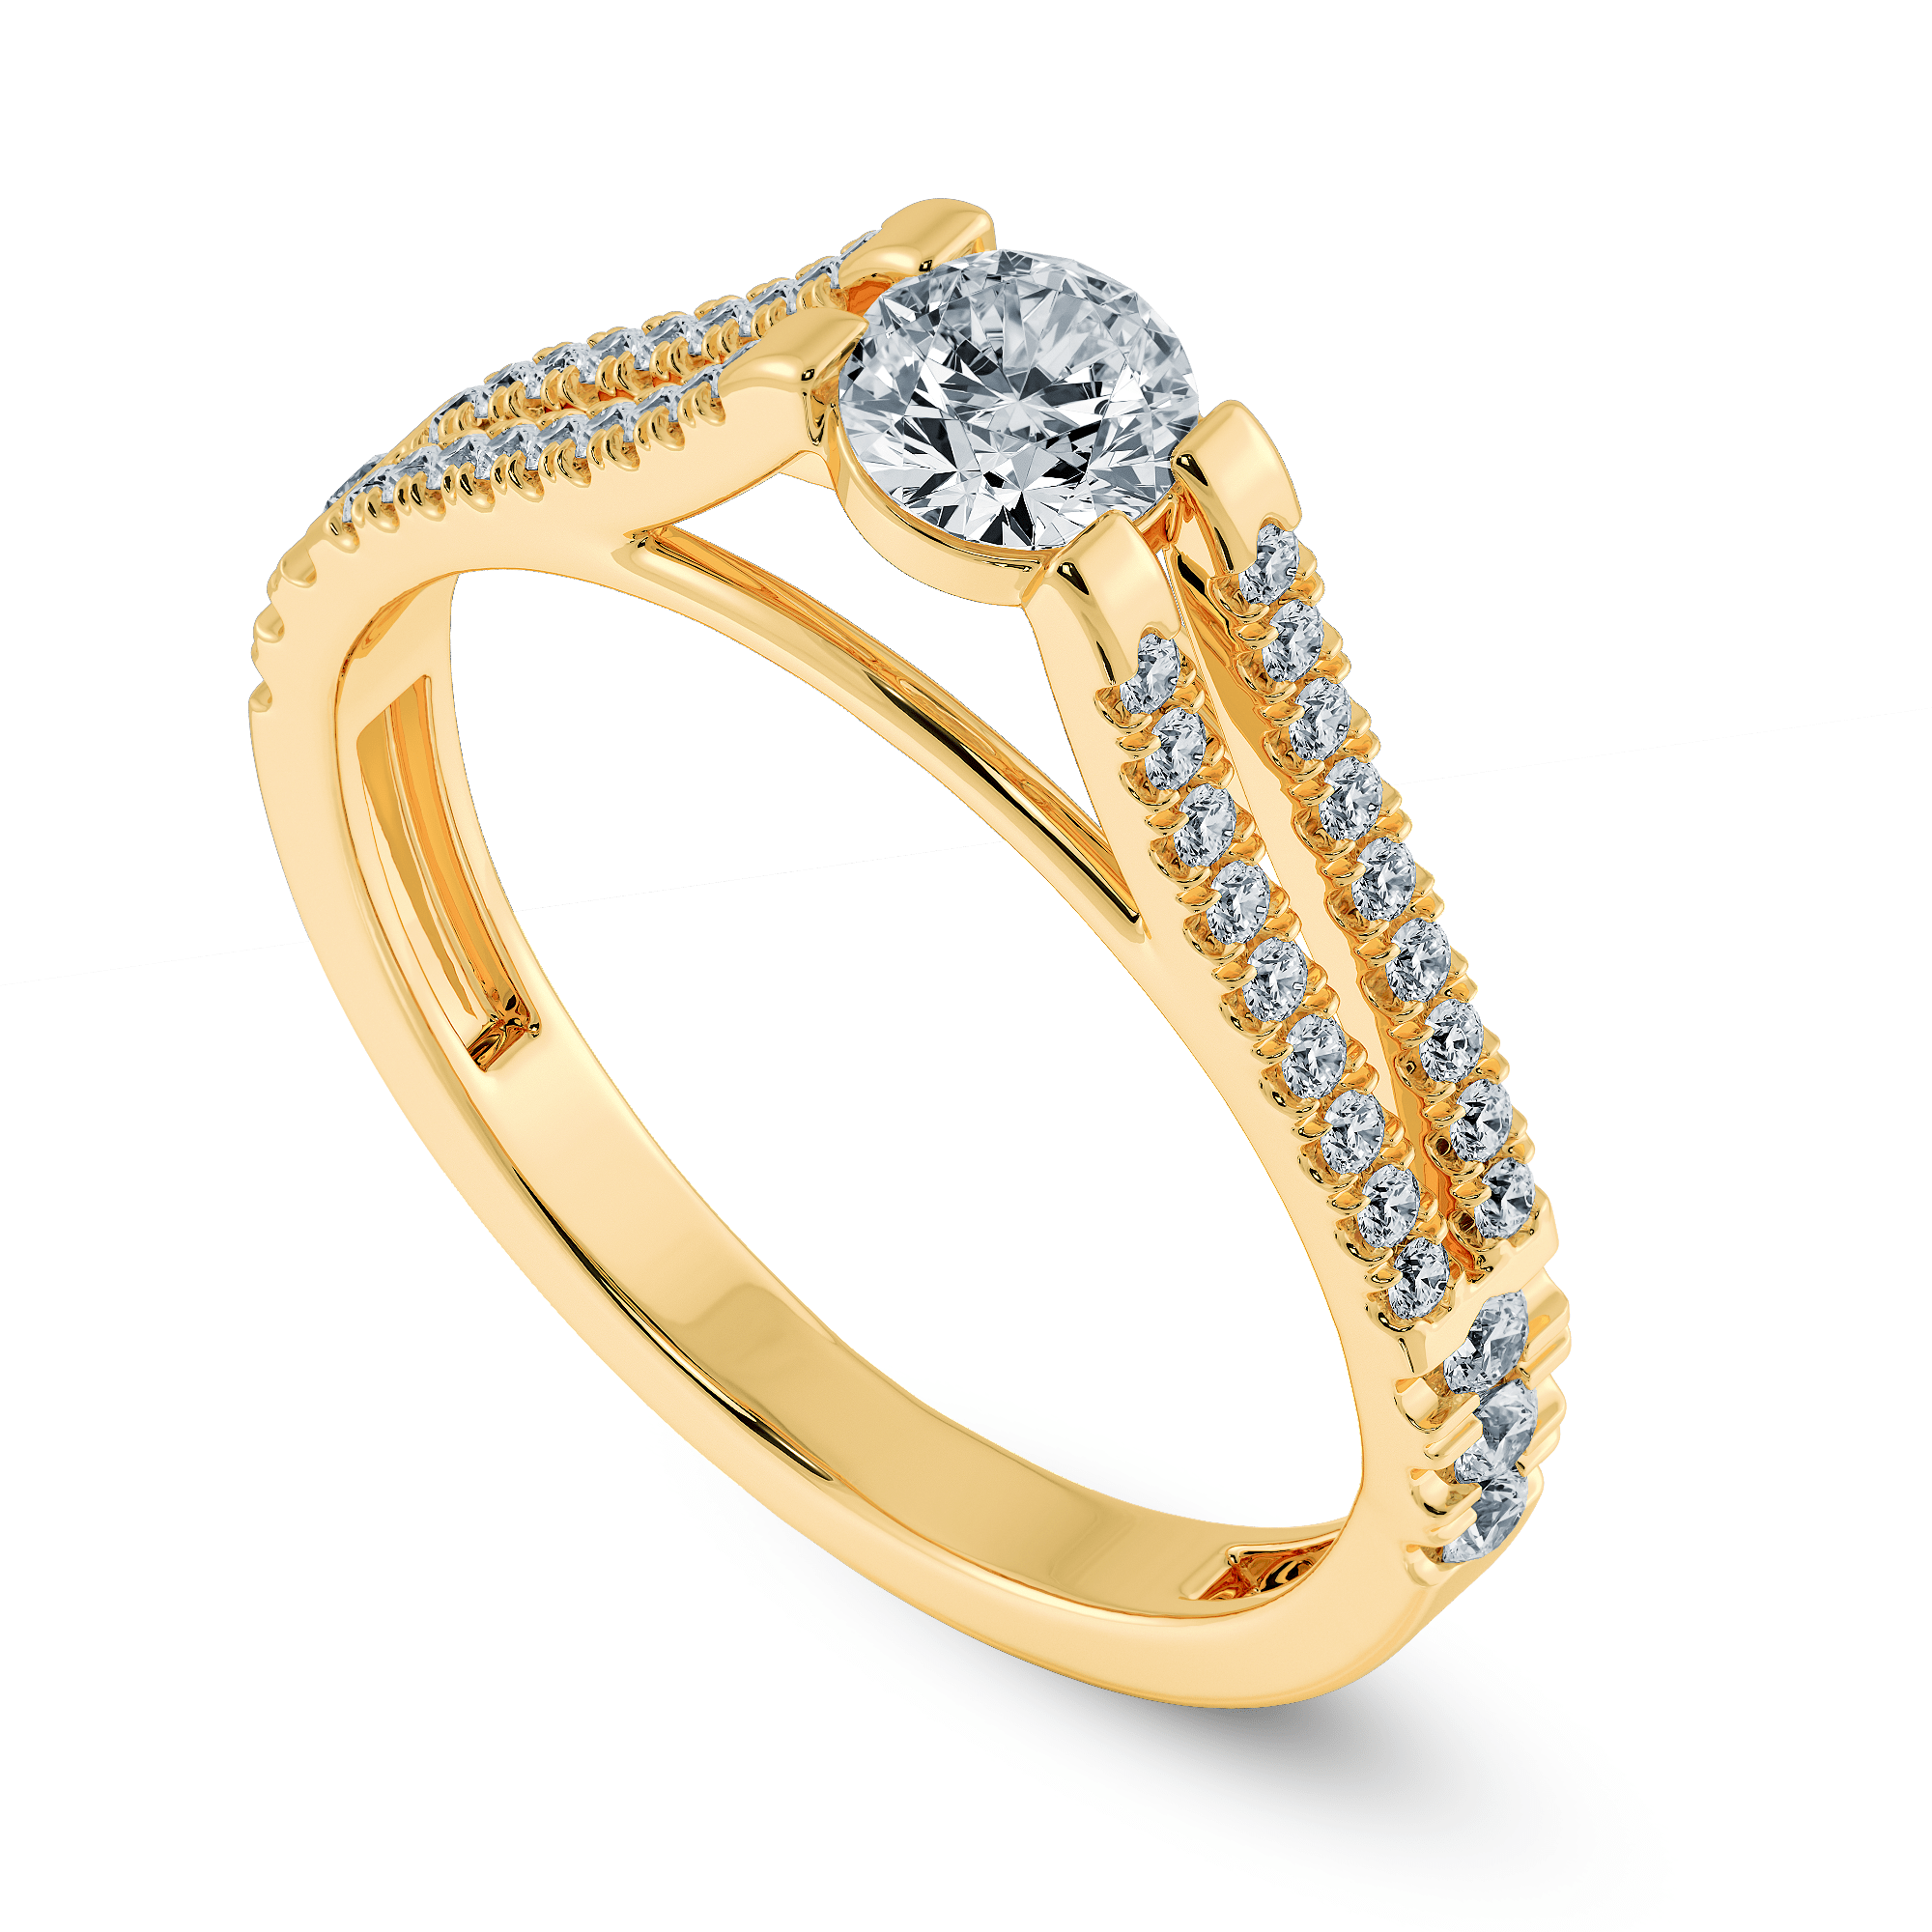 Buy Beautiful Diamond Ring For Women Online | ORRA